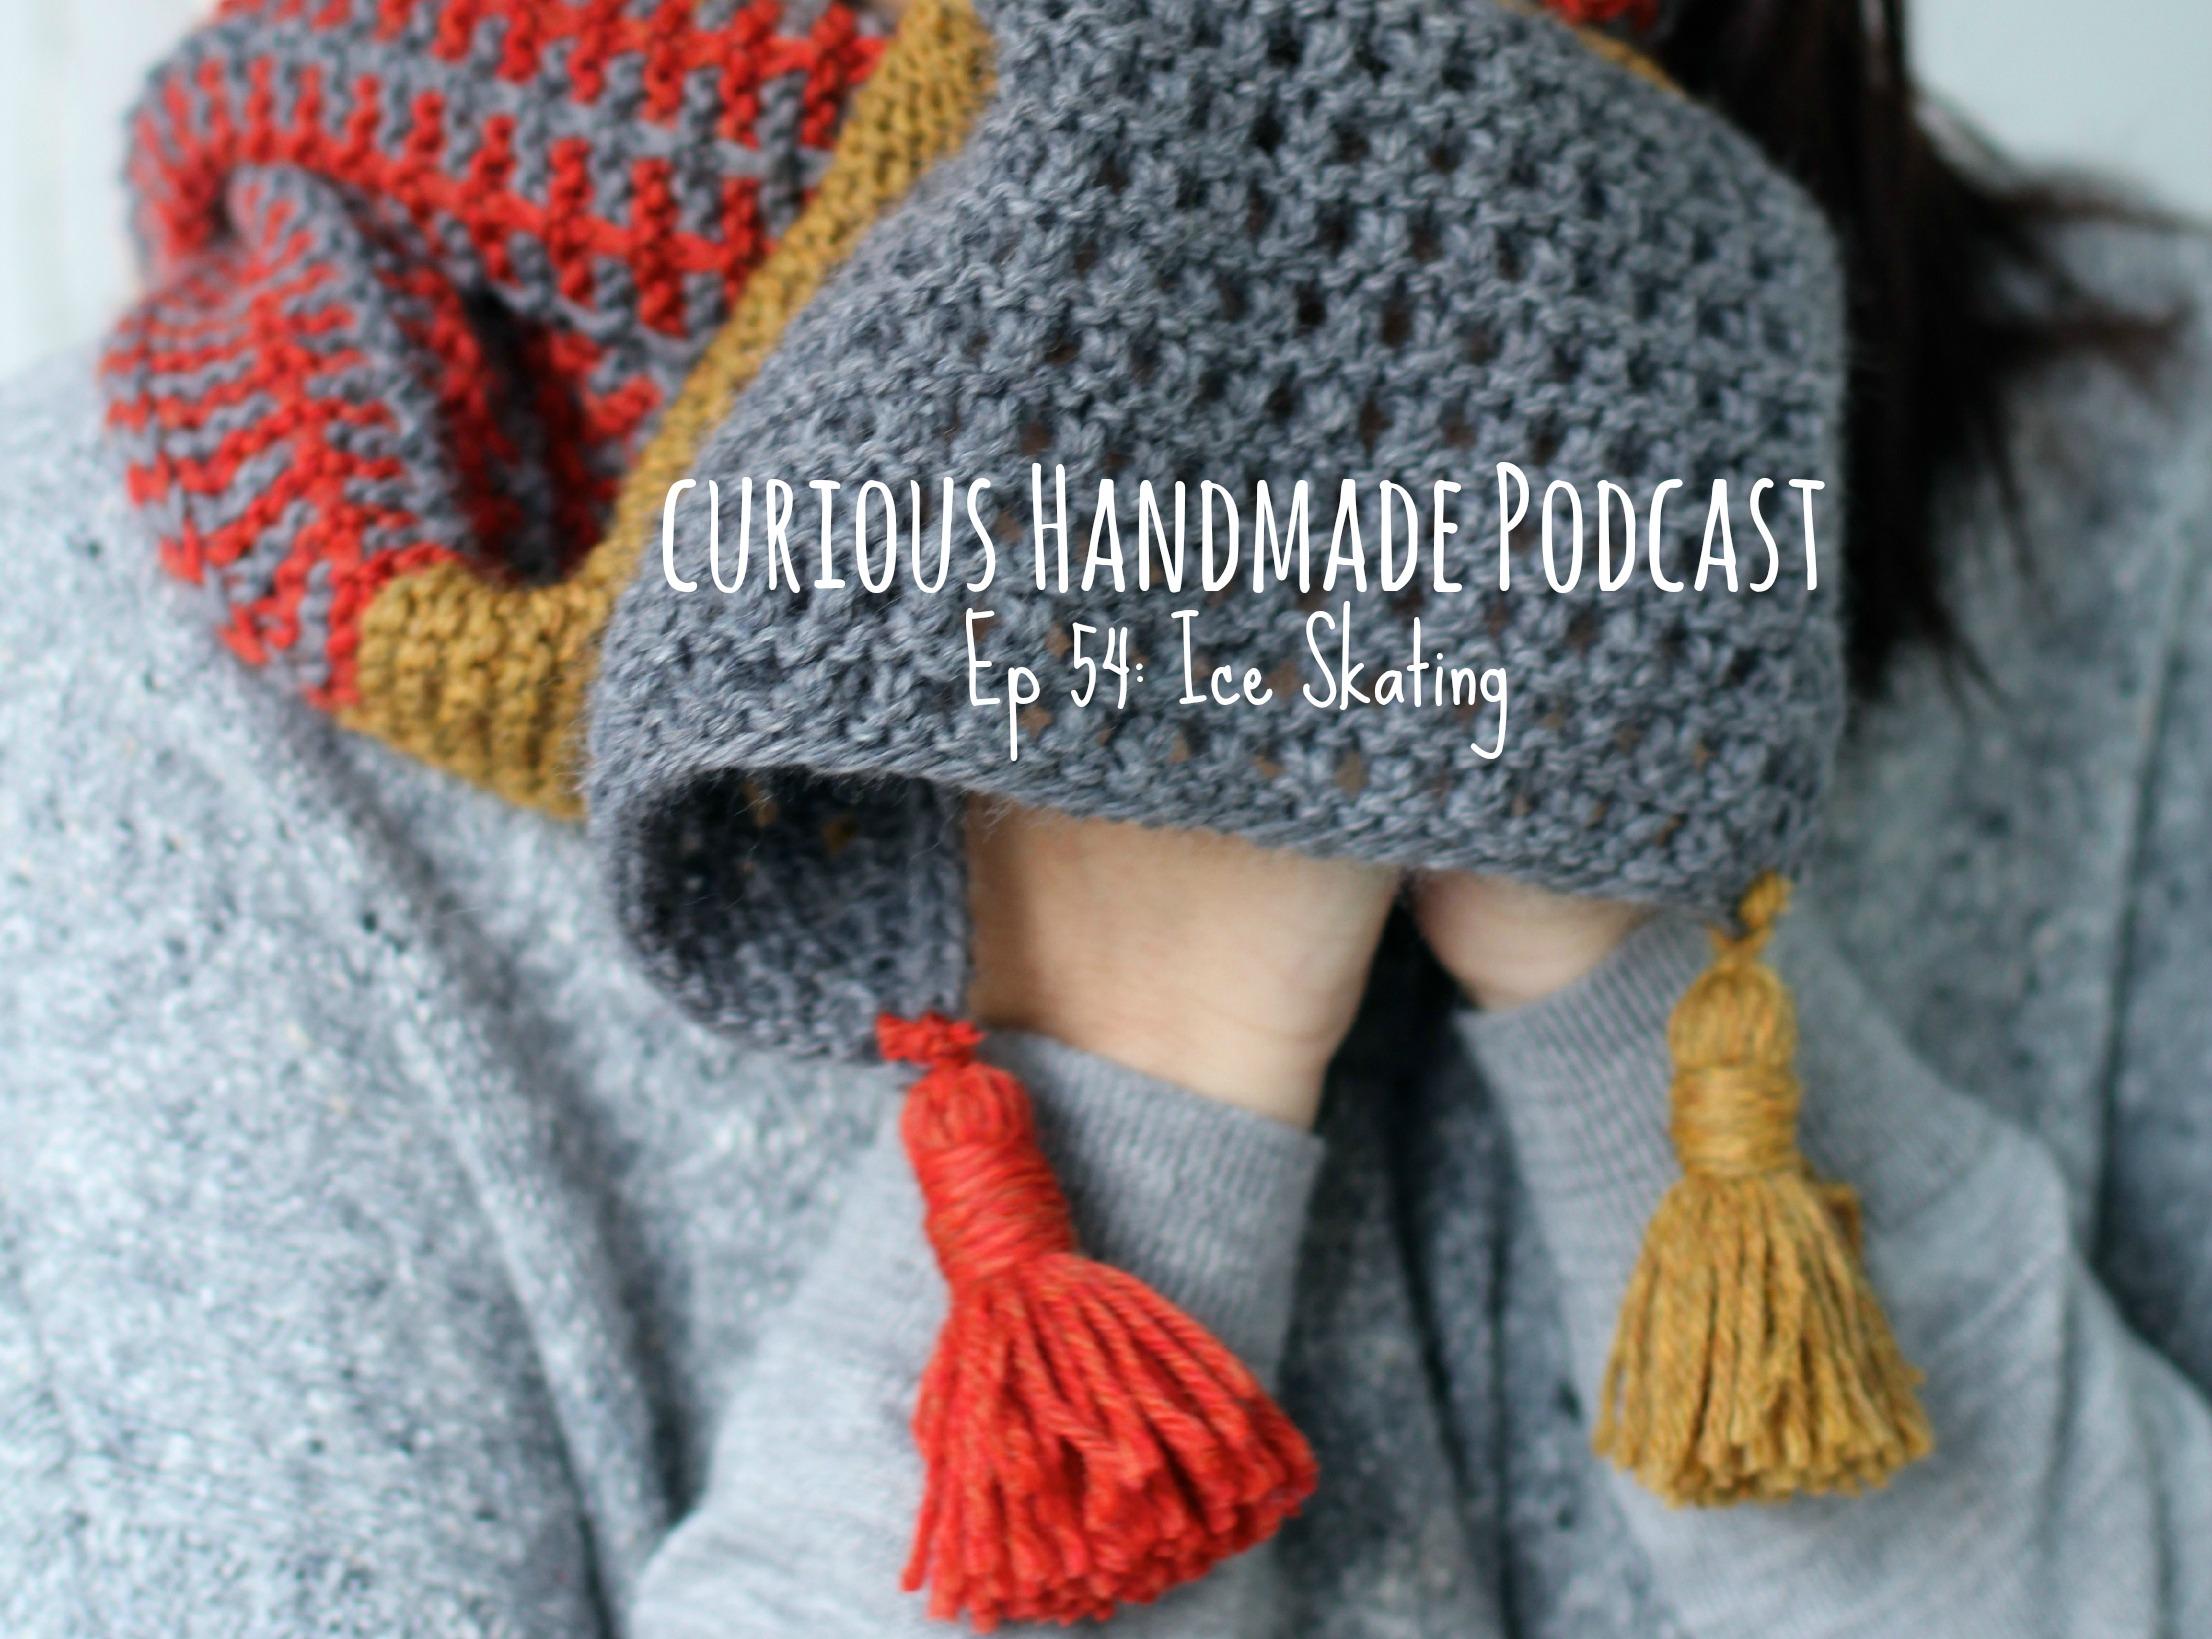 Curious Handmade Podcast ep 54